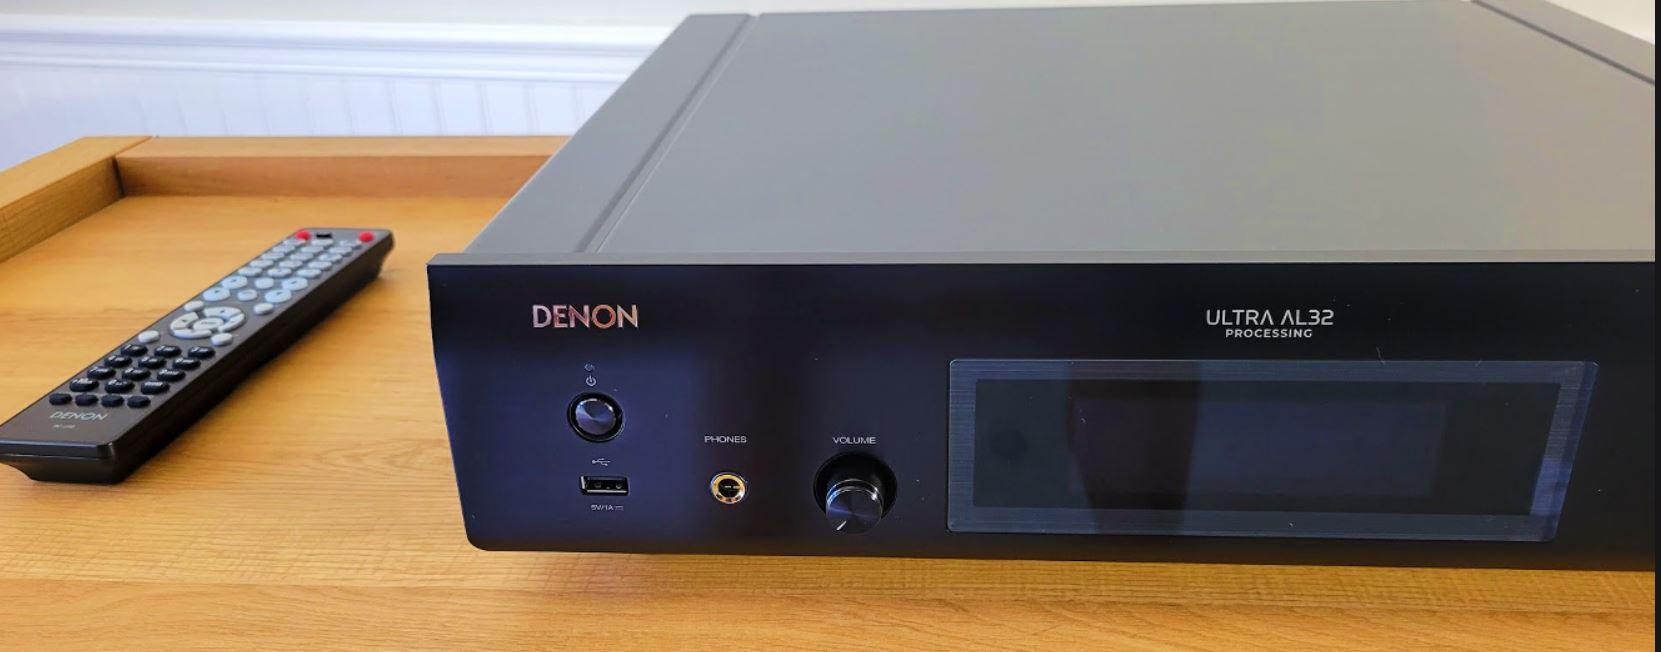 Denon DNP 2000NE Network Player front view